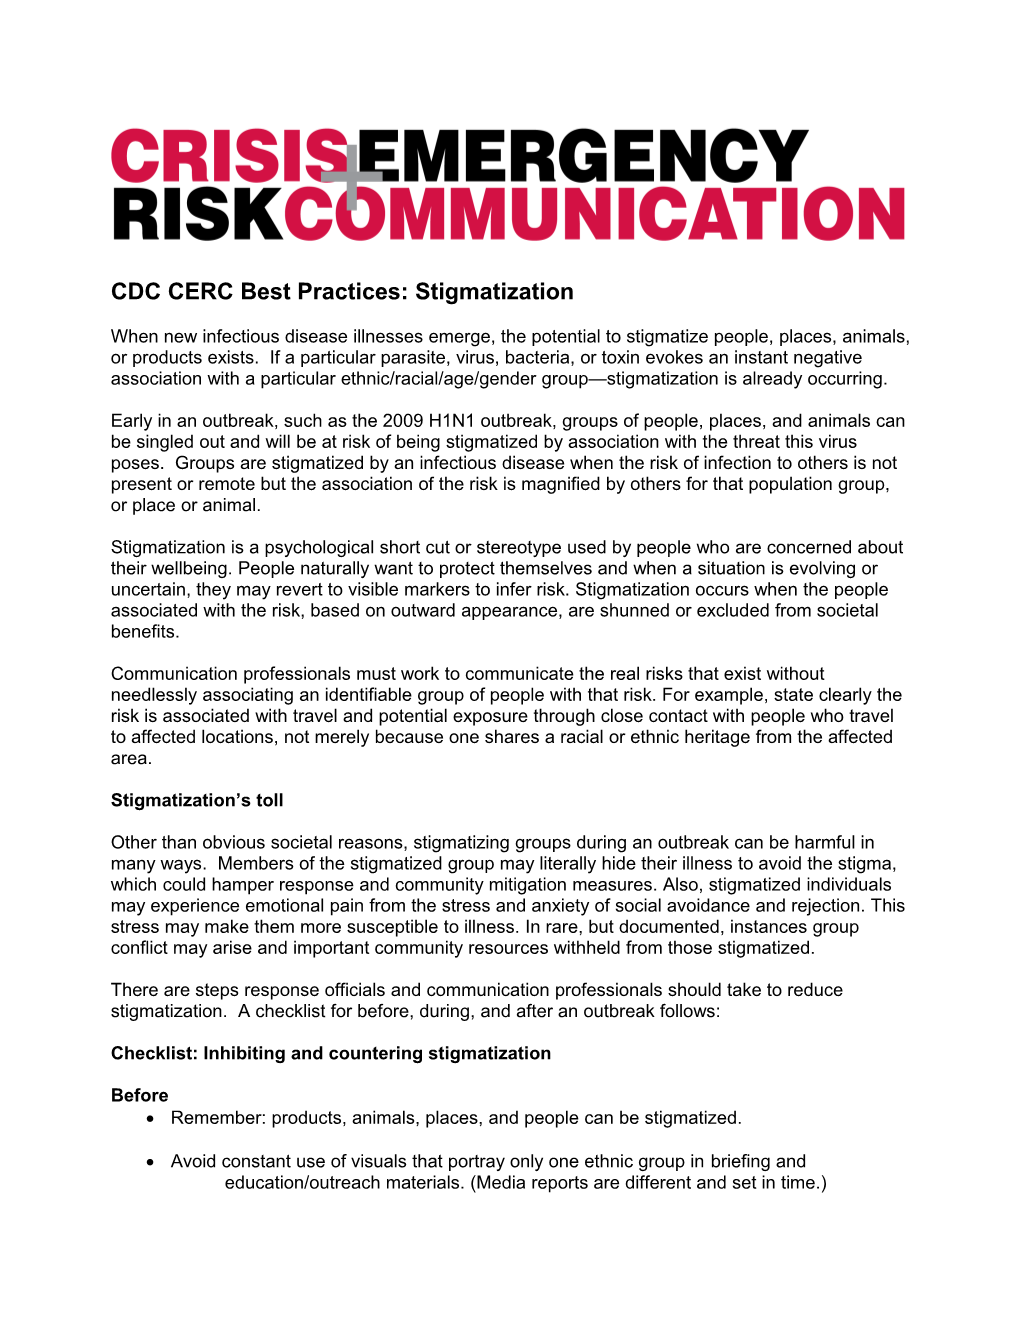 CDC Crisis and Emergency Risk Communication Training